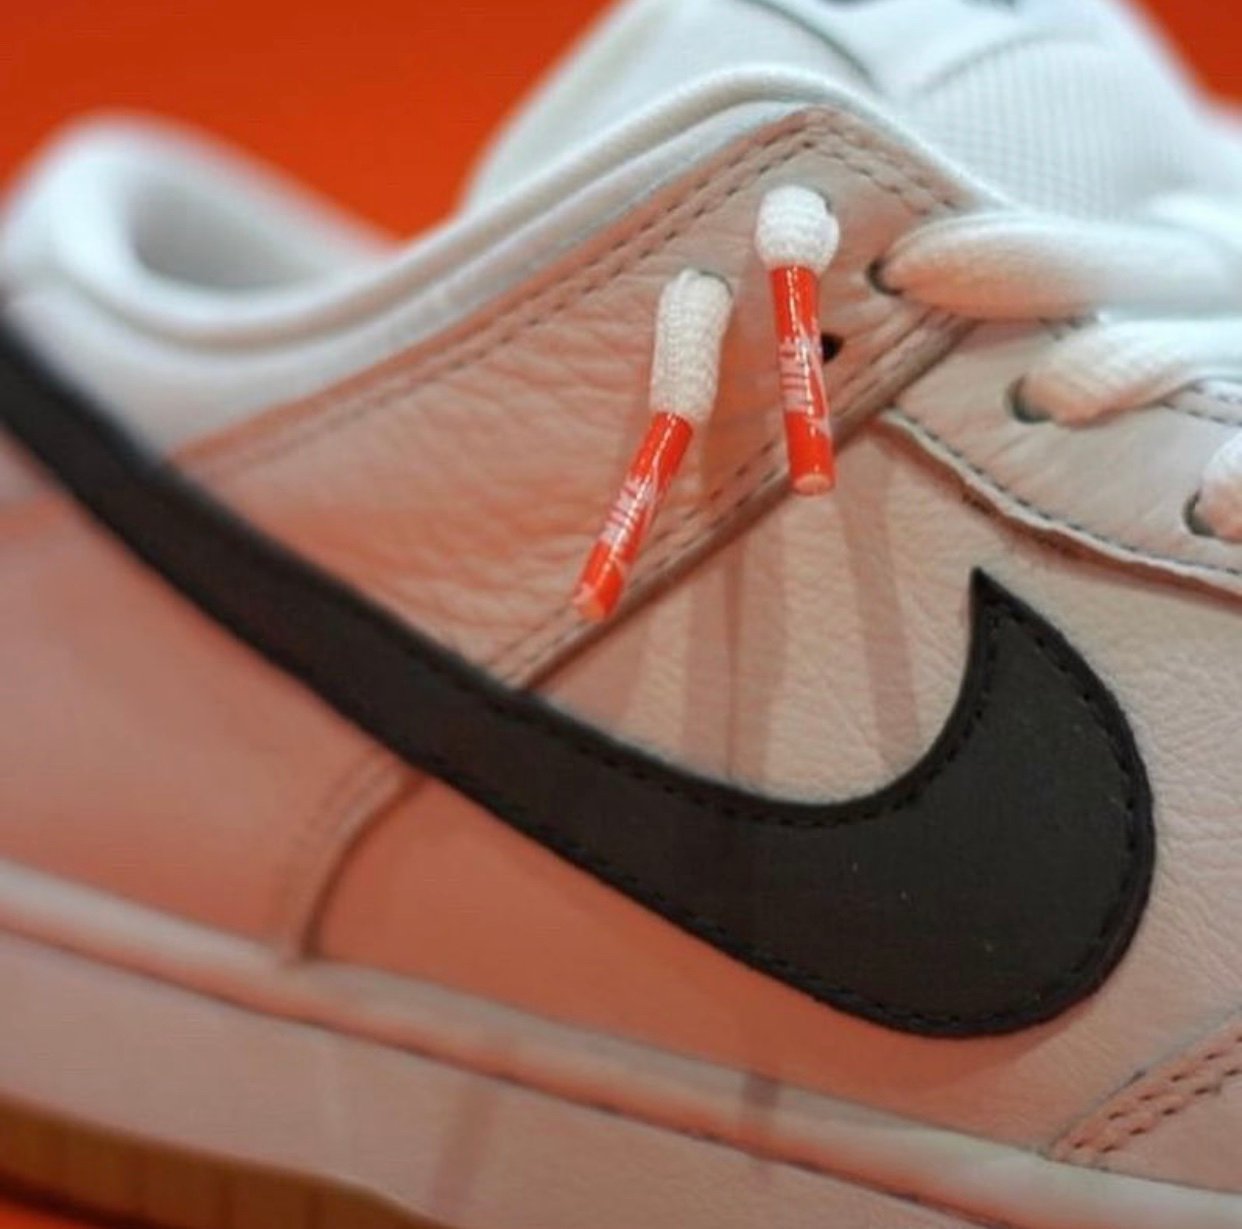 Nike SB Dunk Low Orange Label White Gum Release Info